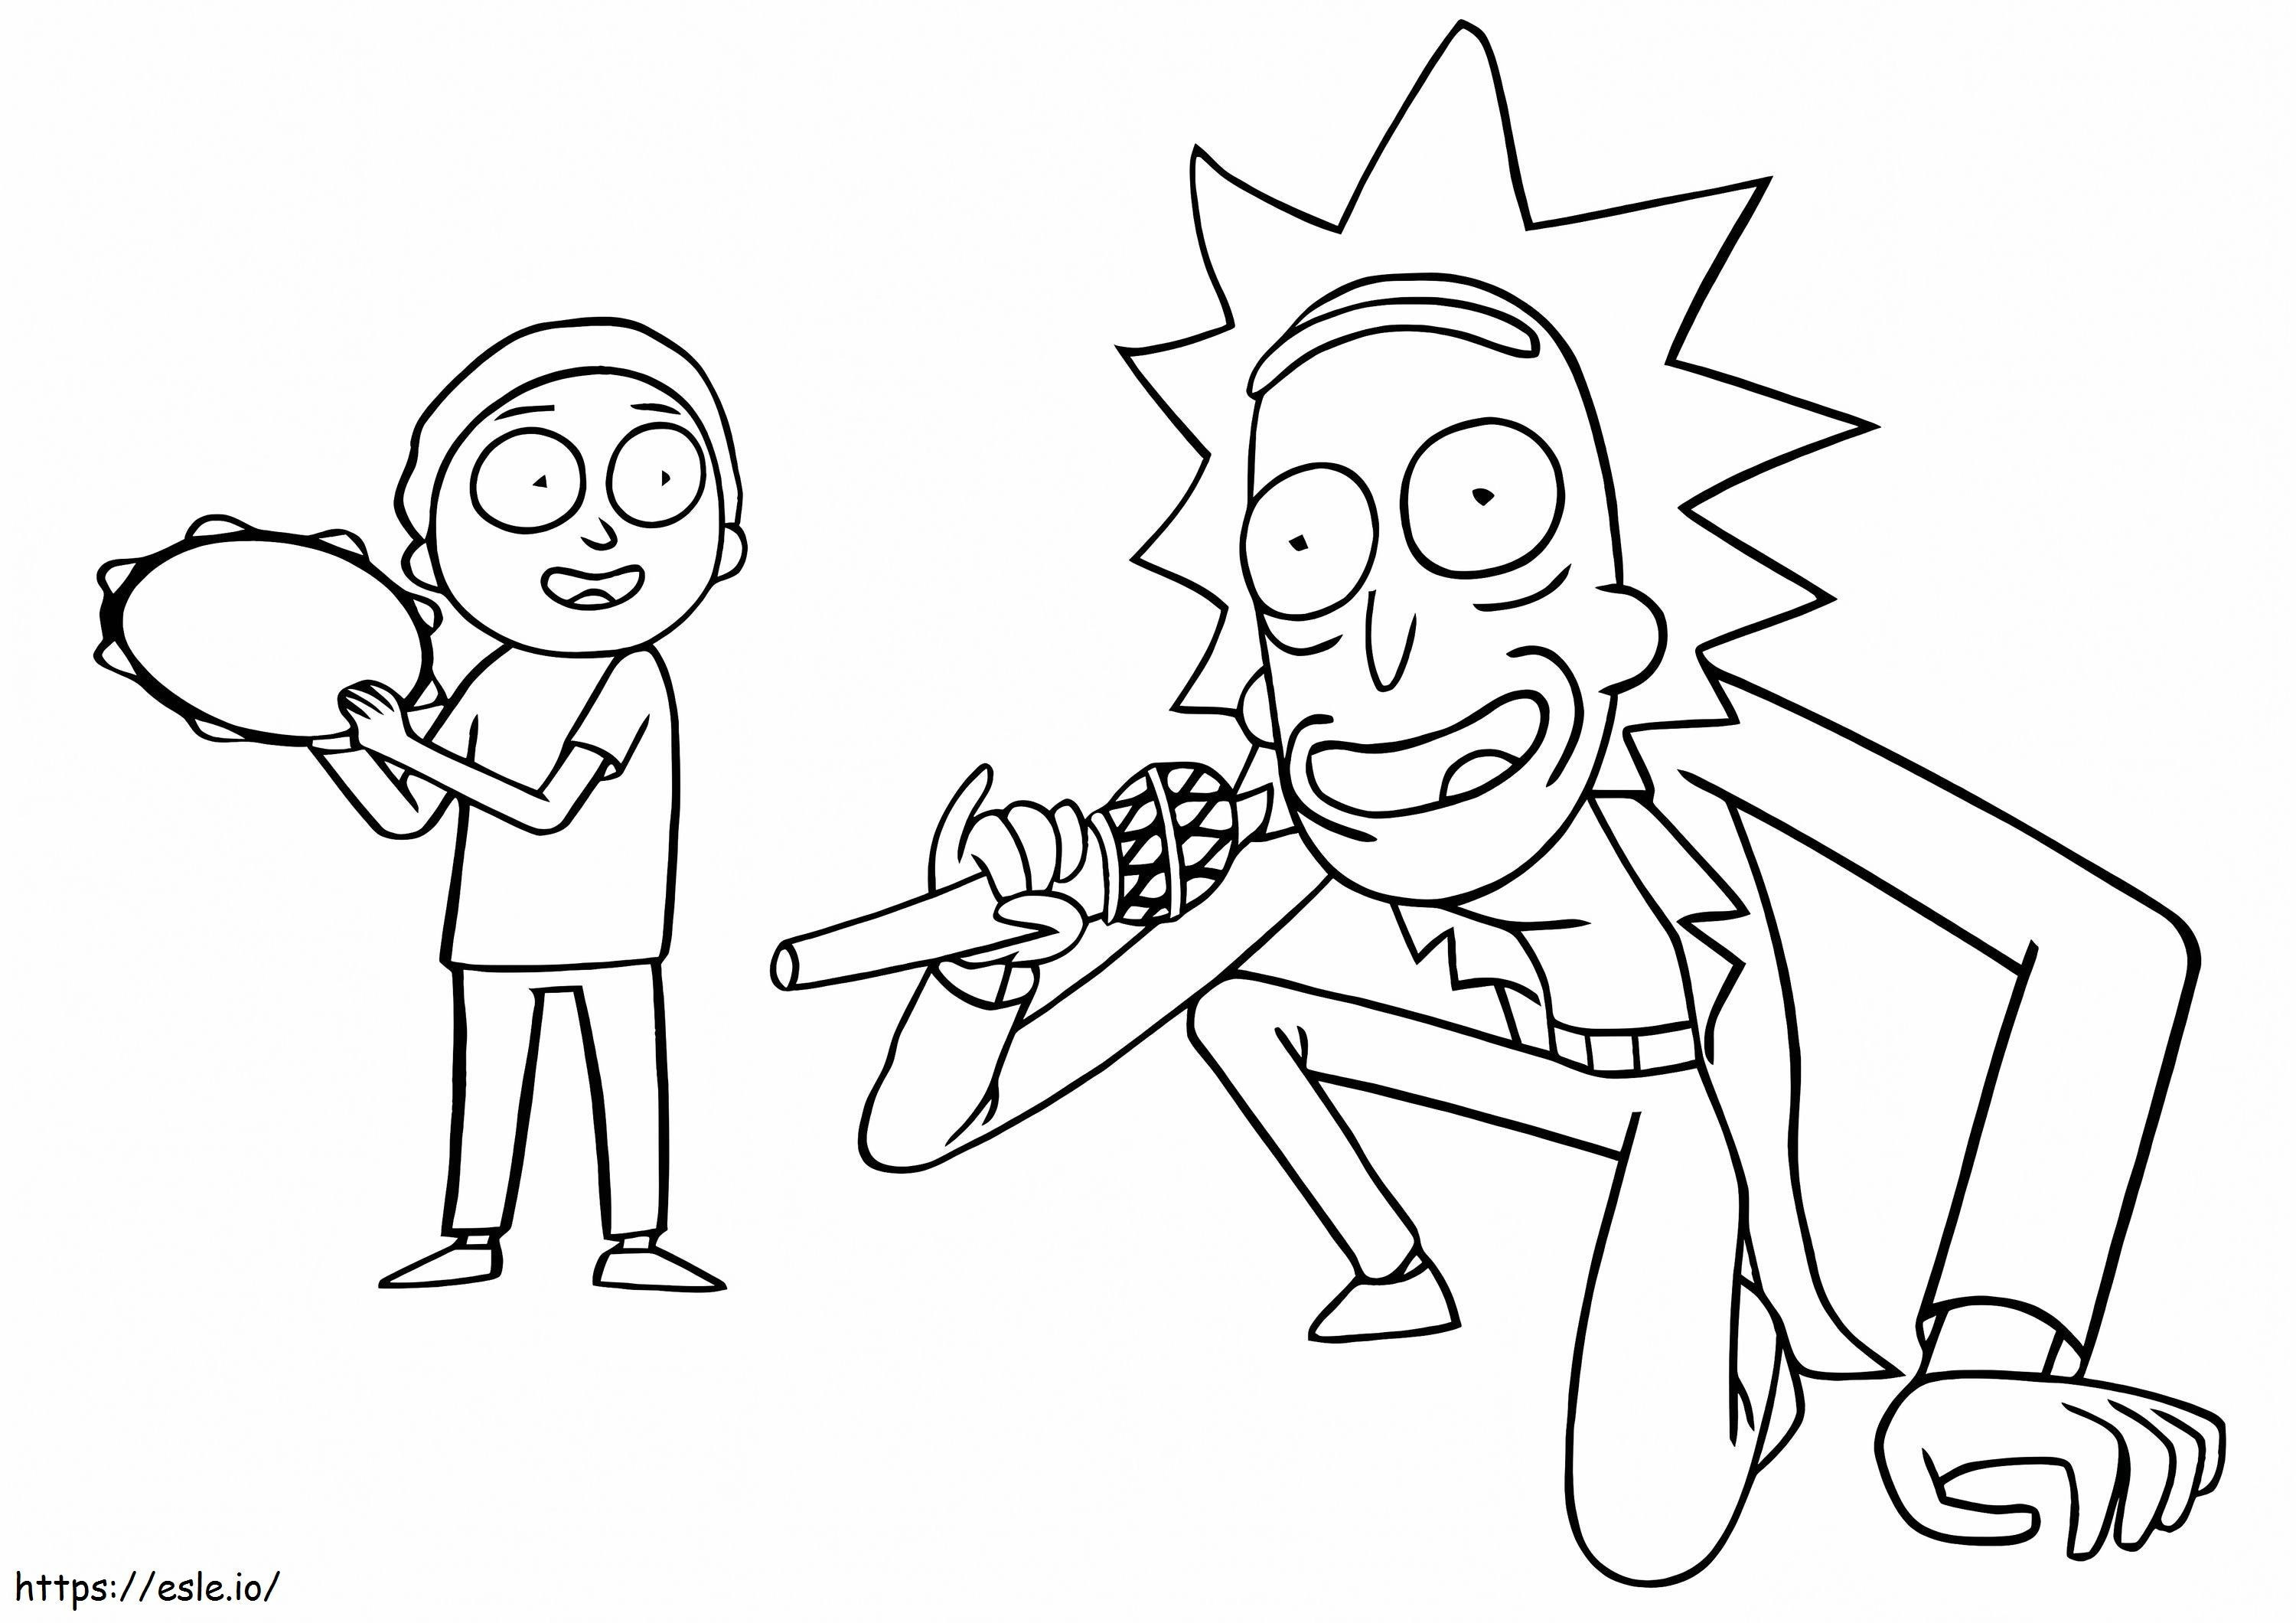 Rick Sanchez e Morty para colorir